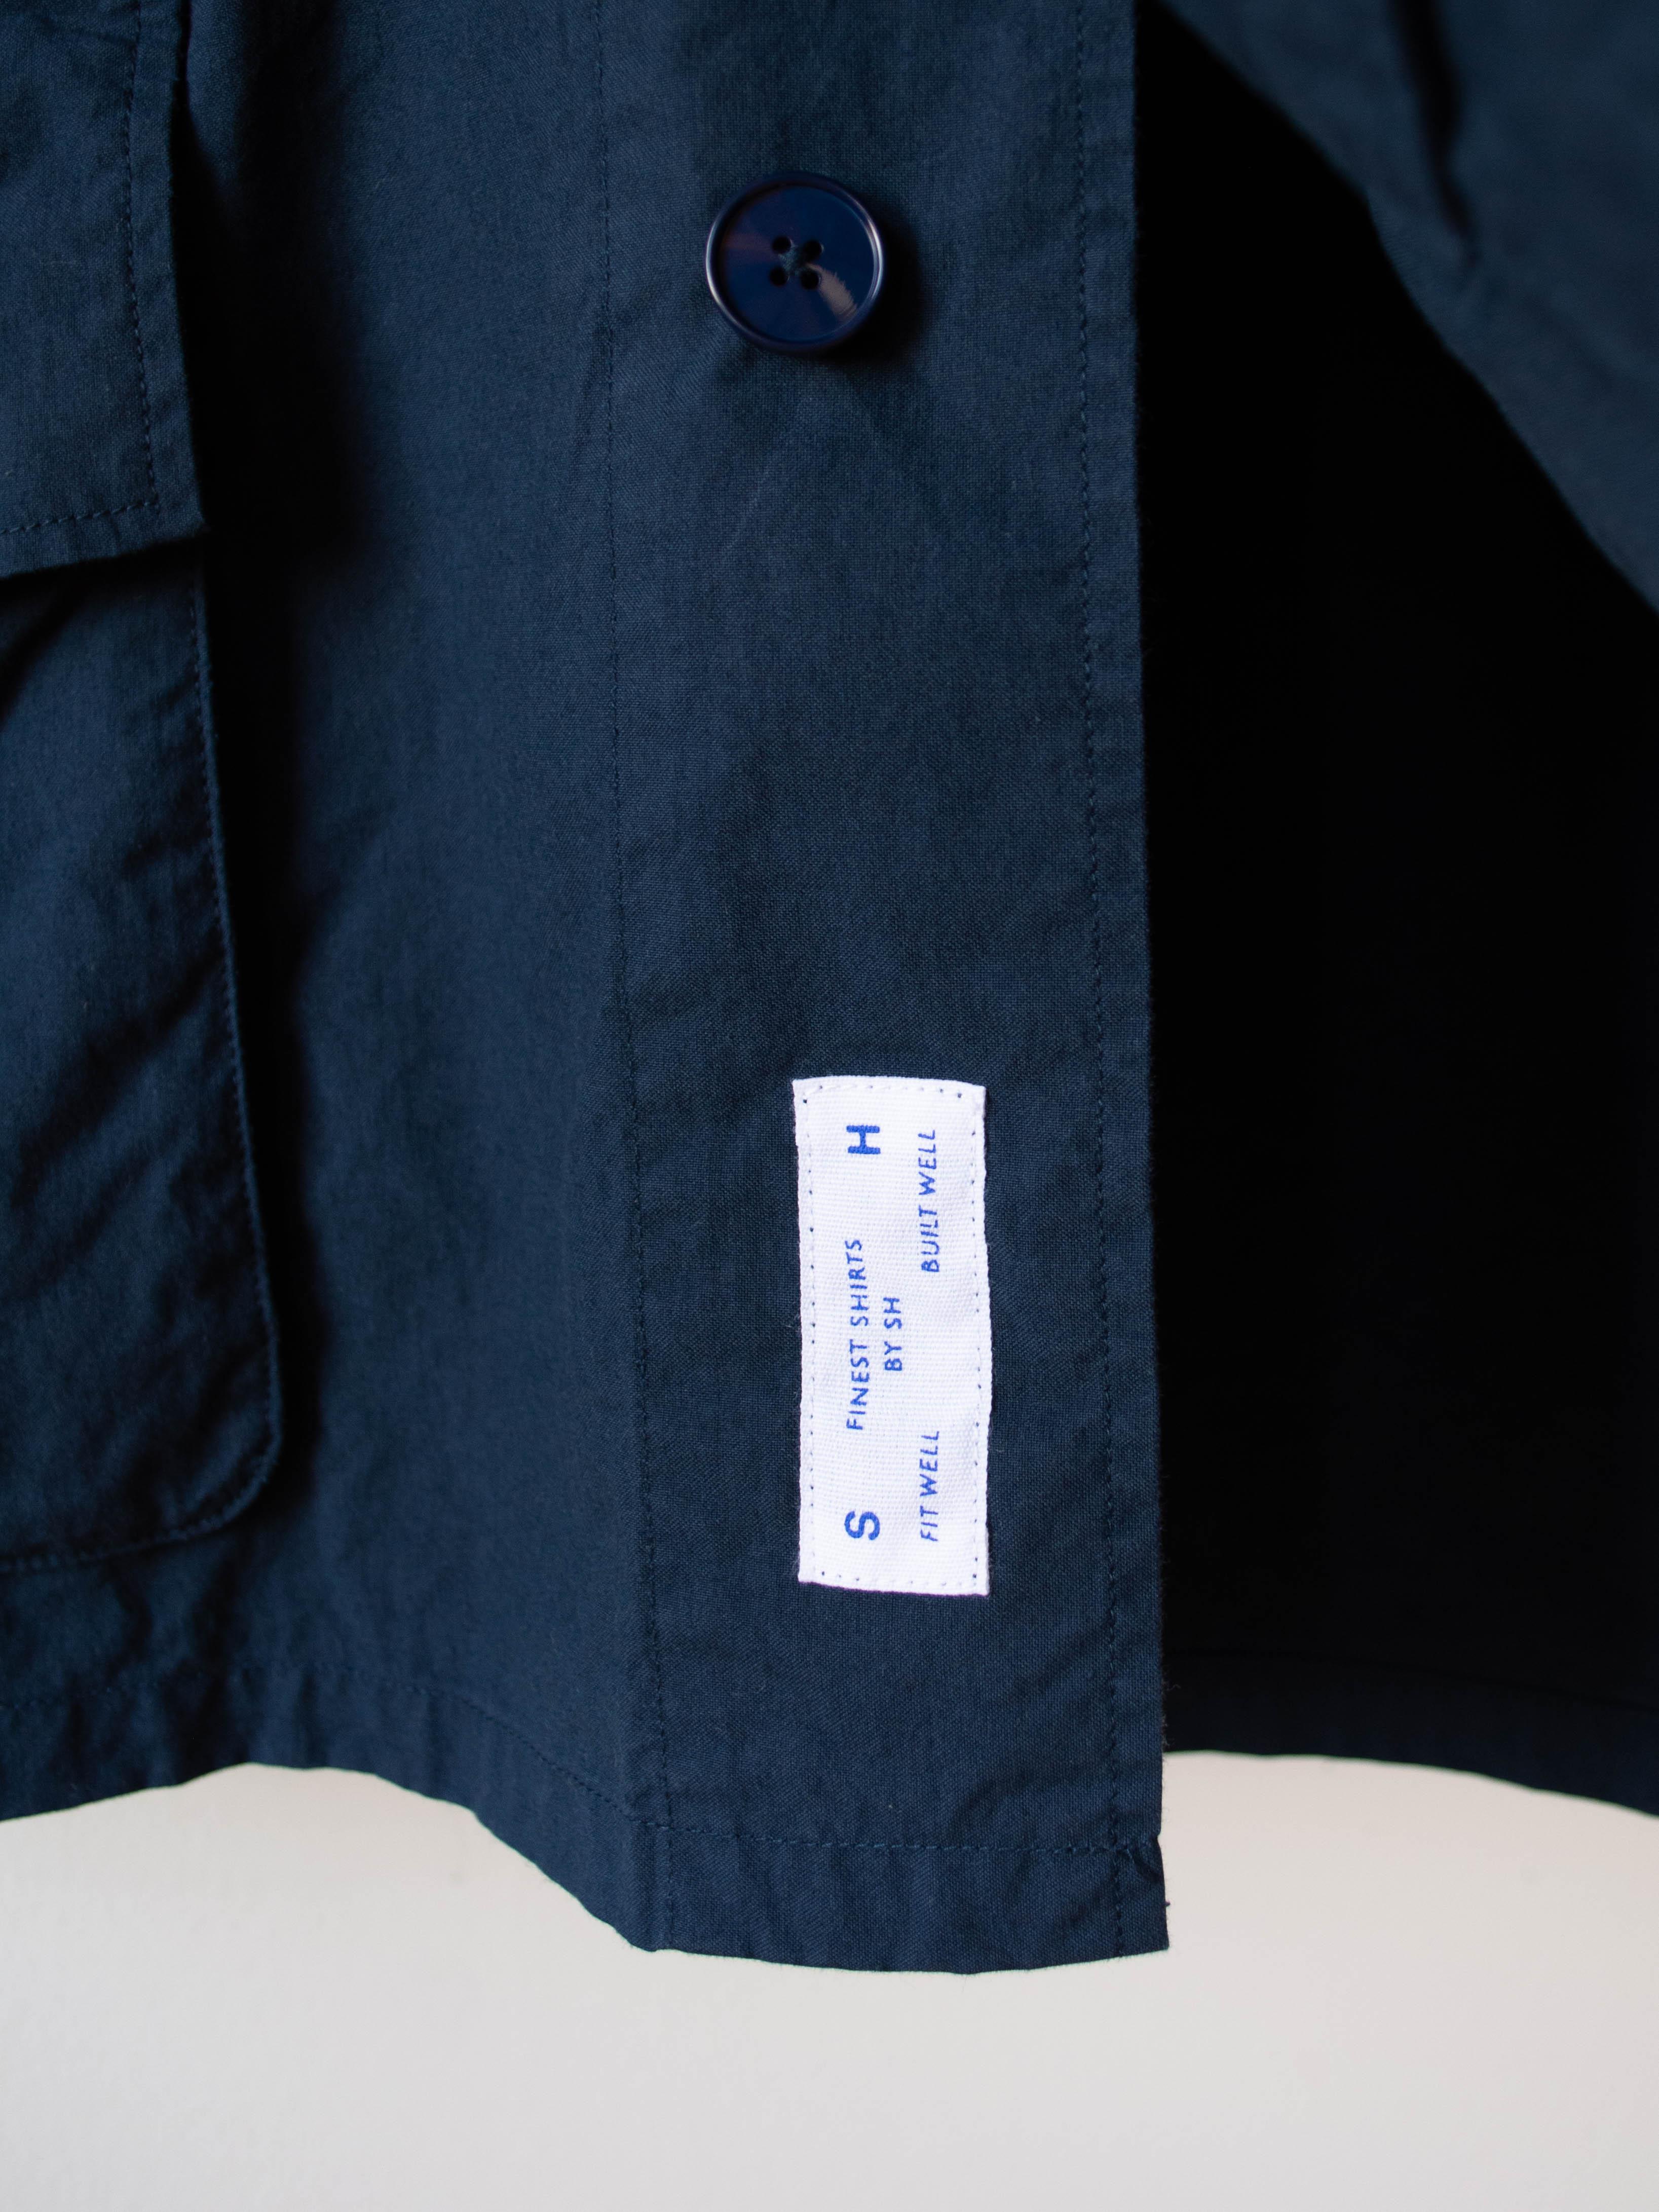 Namu Shop - S H Fatigue Shirt - Navy